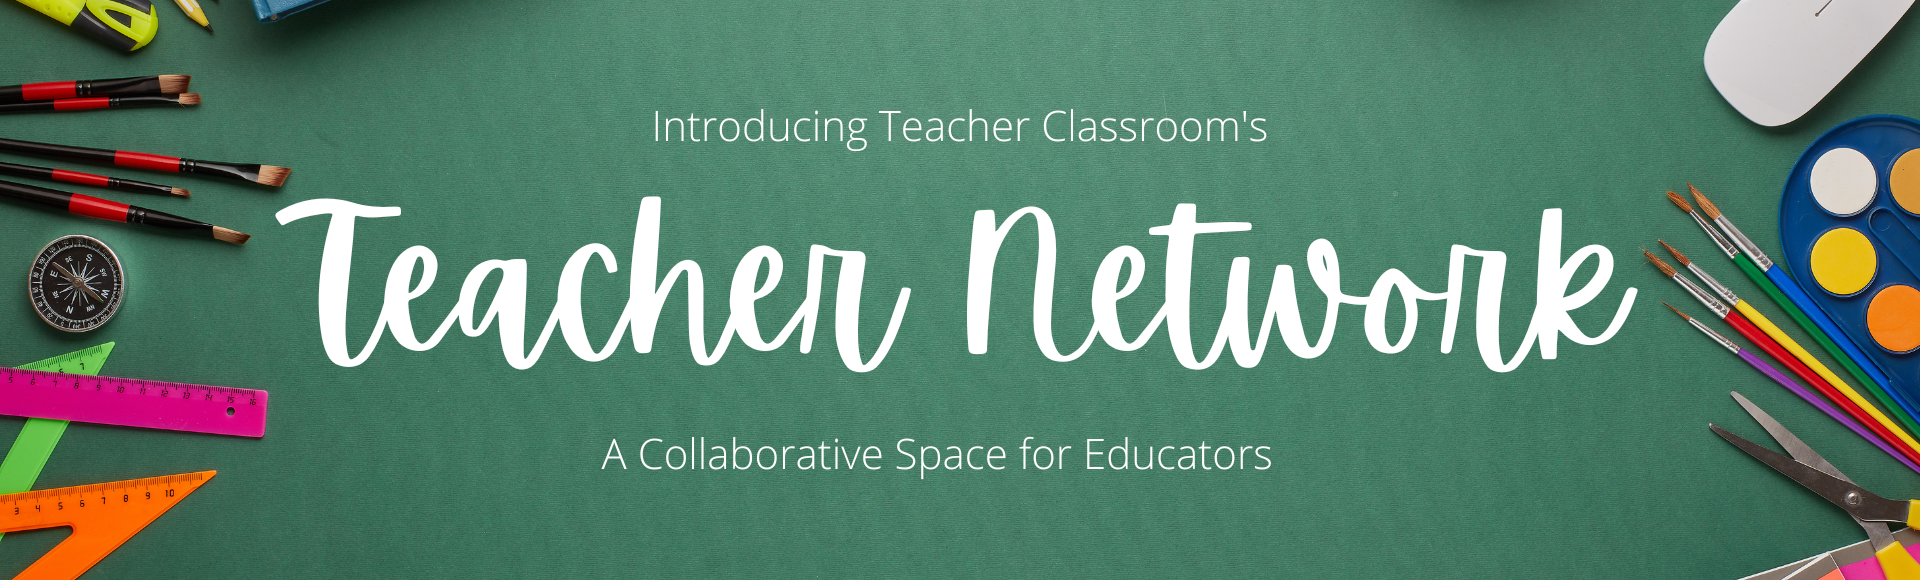 Teacher Network - A Collaborative Space for Educators